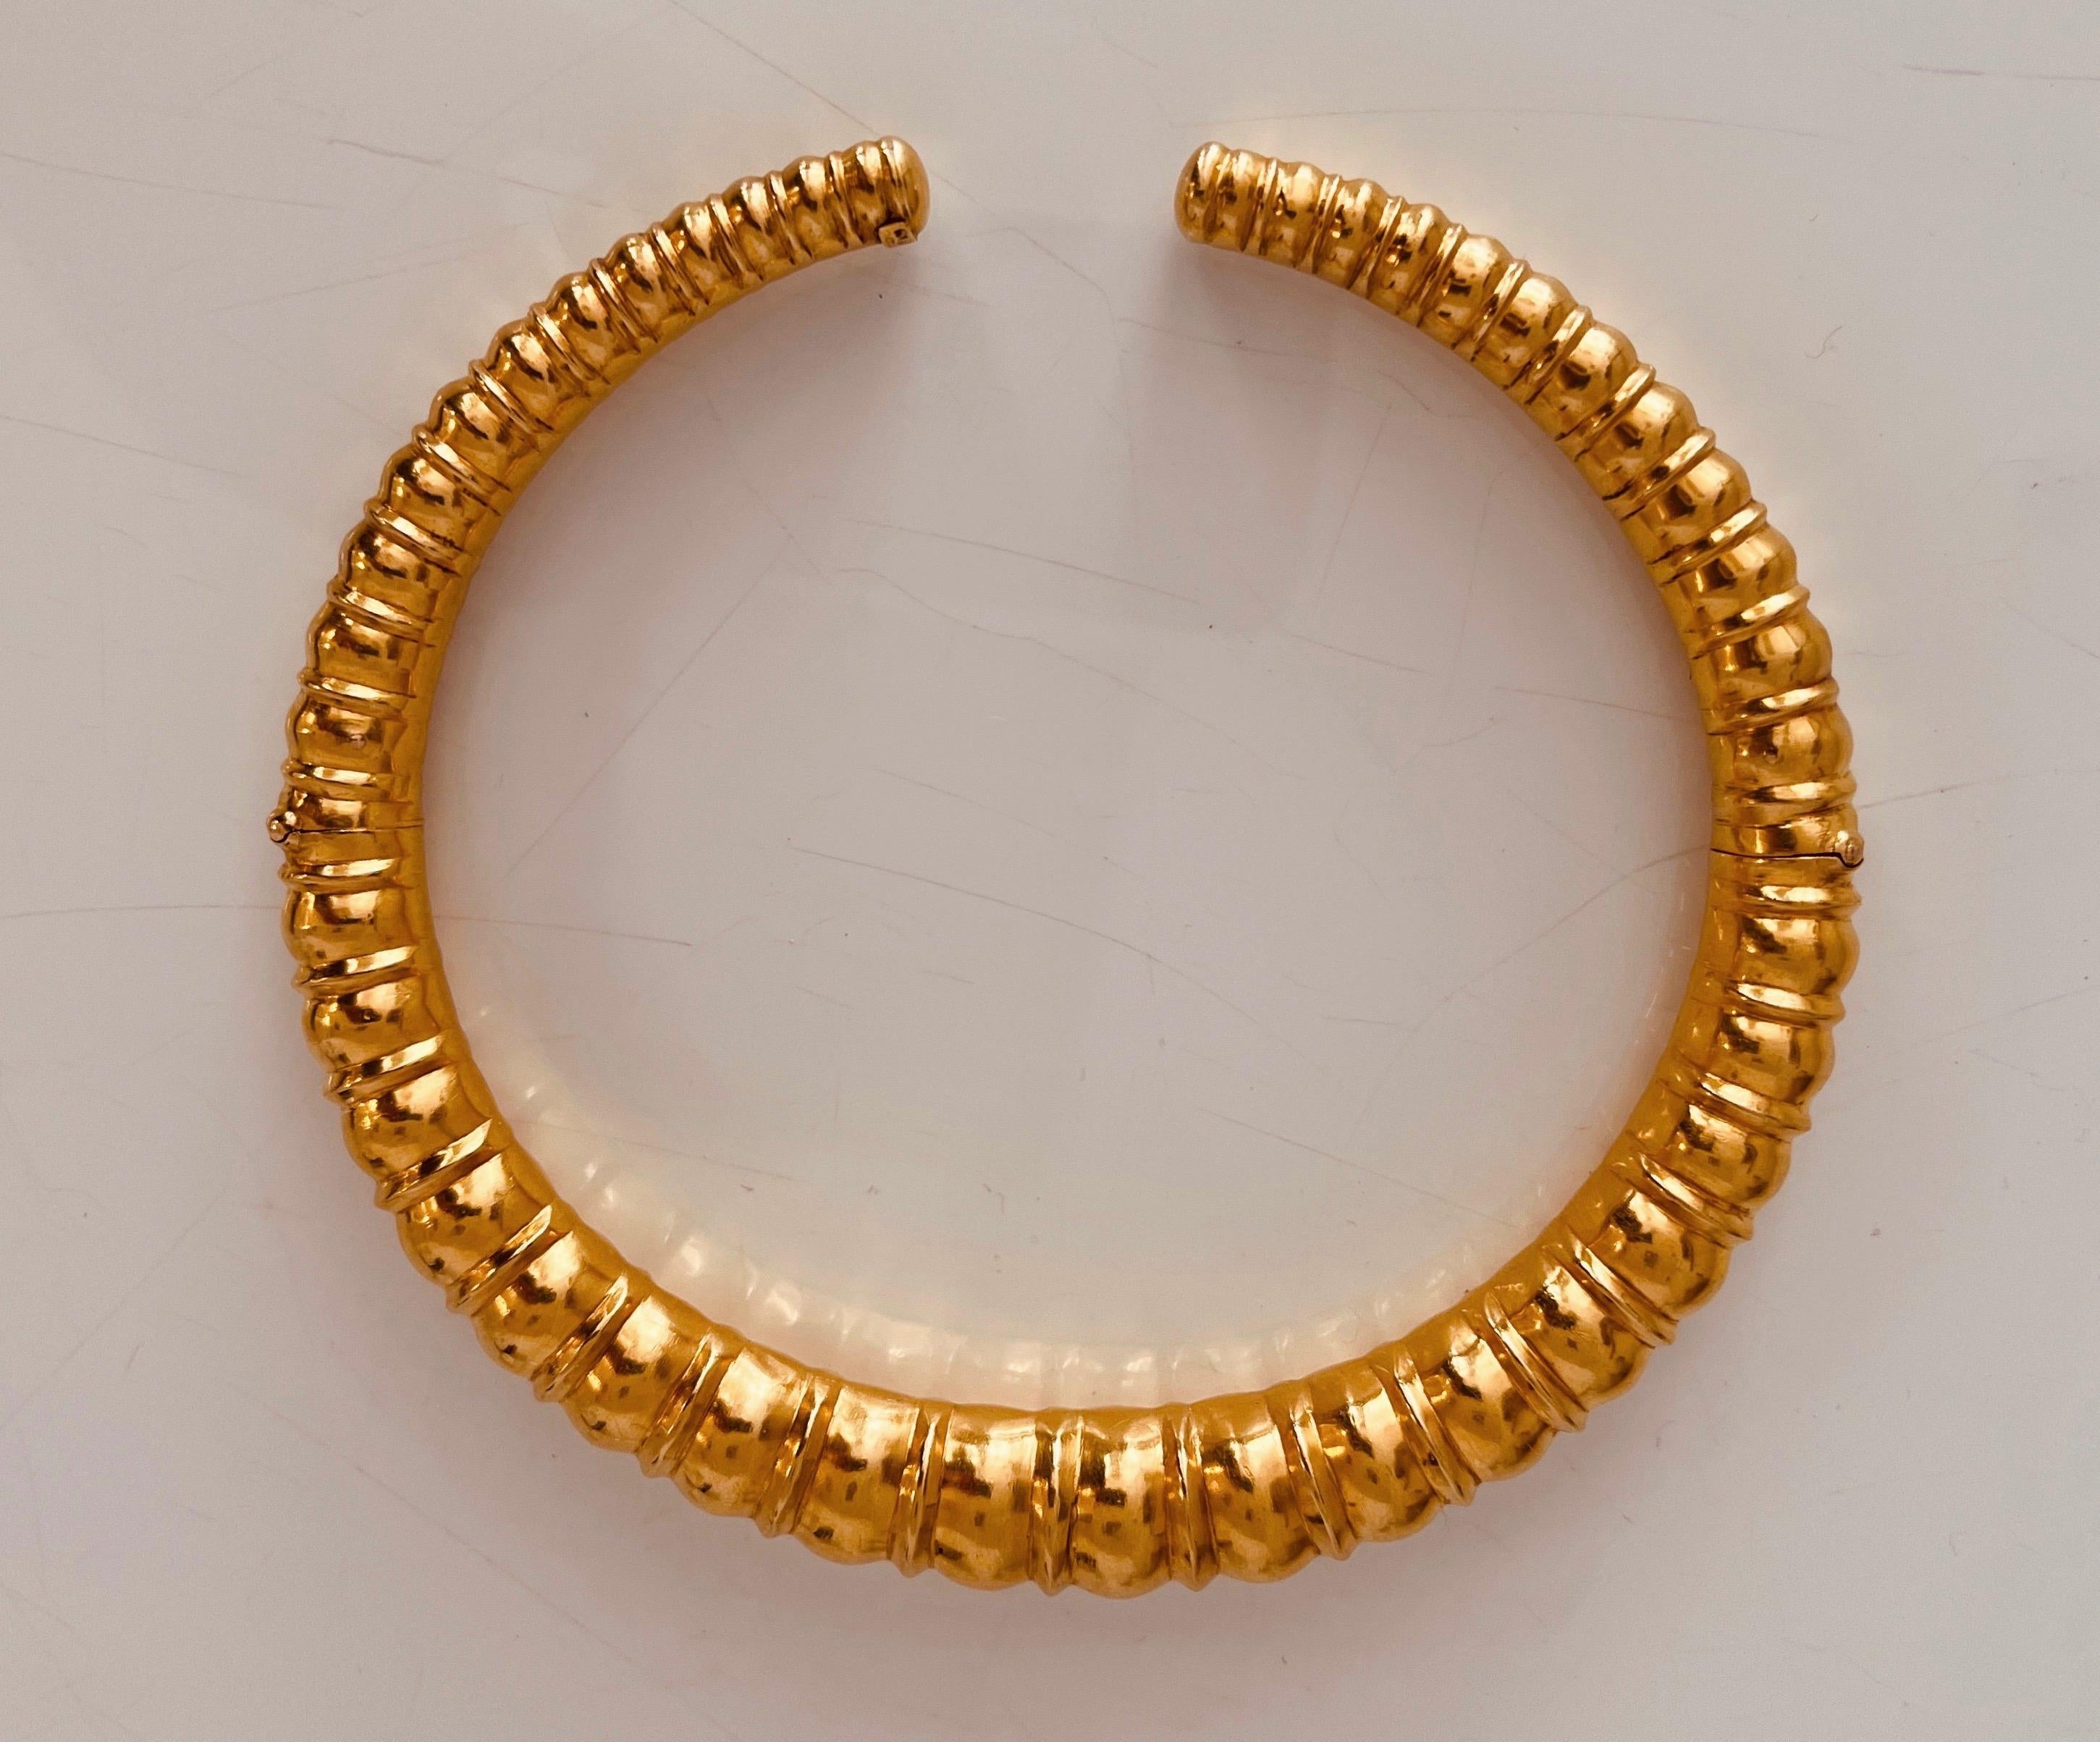 22 carat gold jewellery